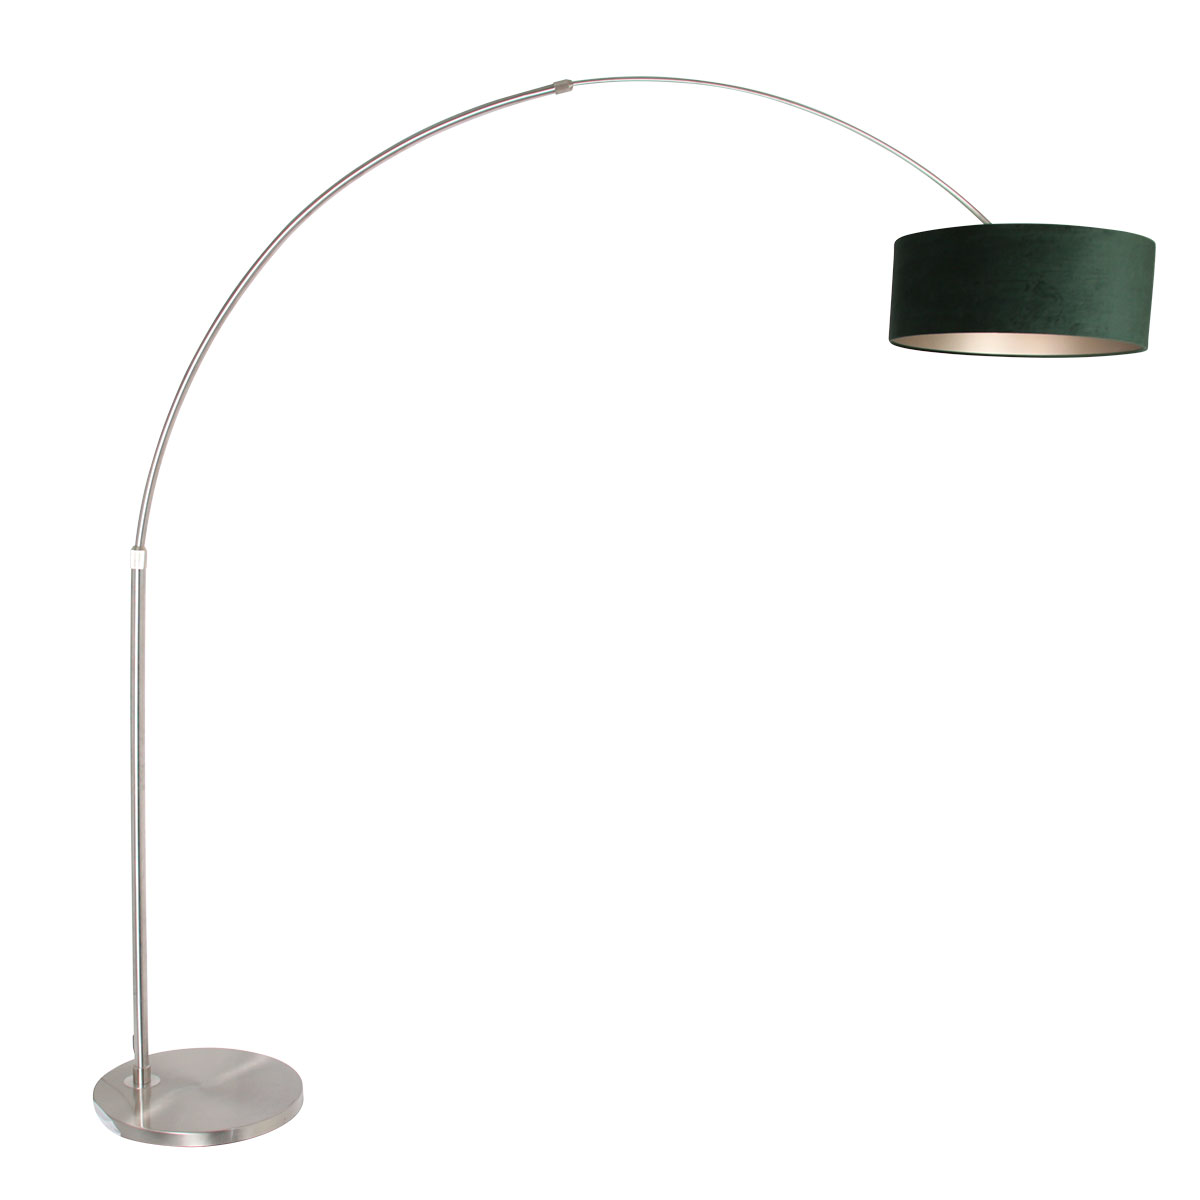 Booglamp lamp met kap Sparkled groen | Industriele lampen online